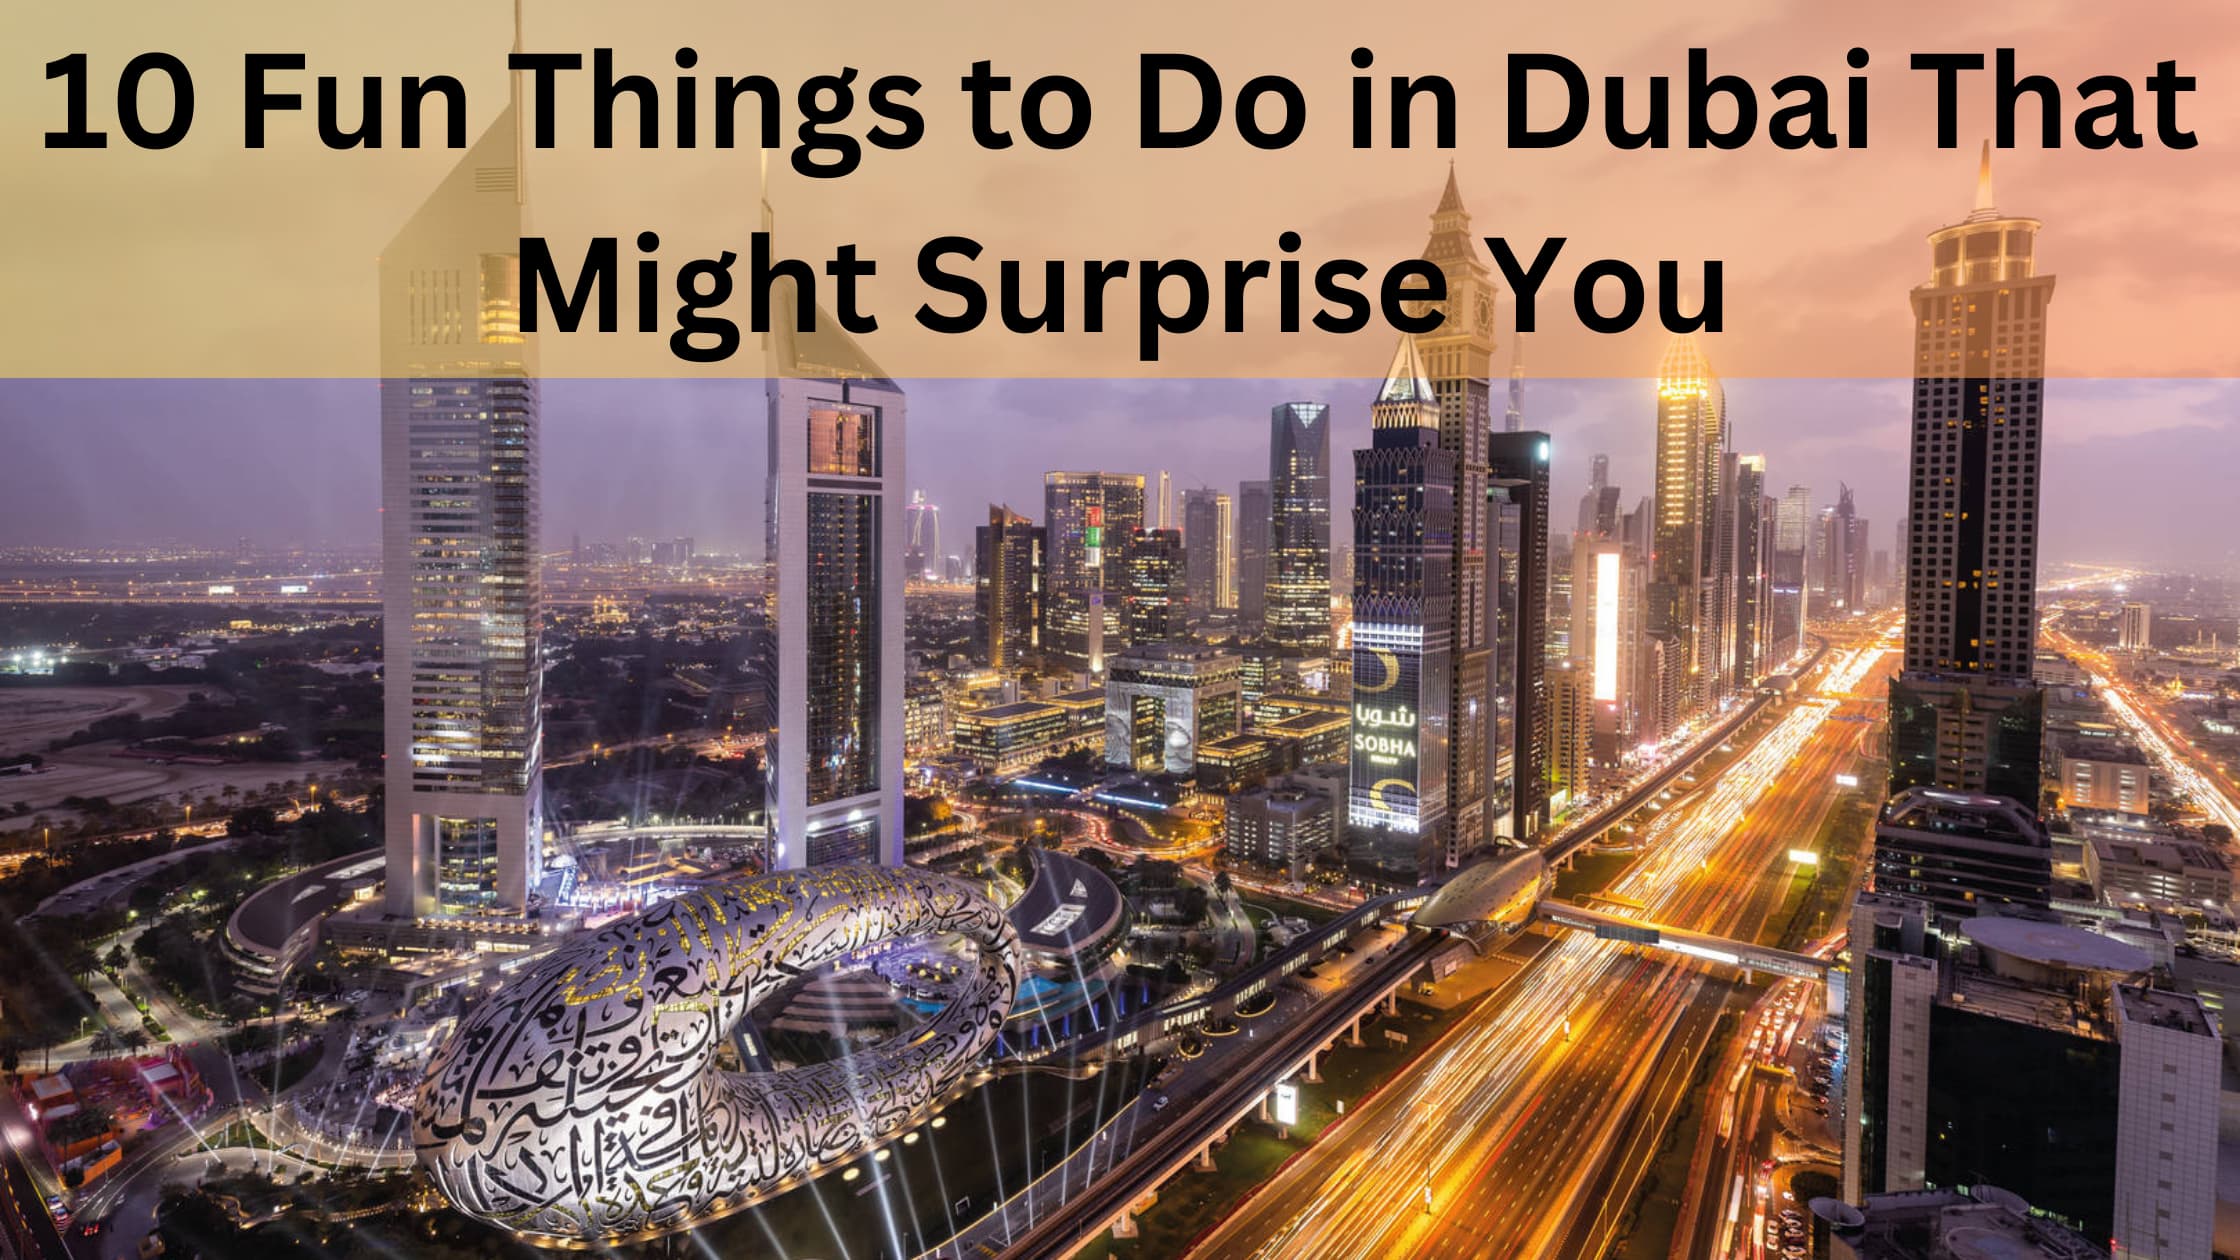 Fun Things to Do in Dubai